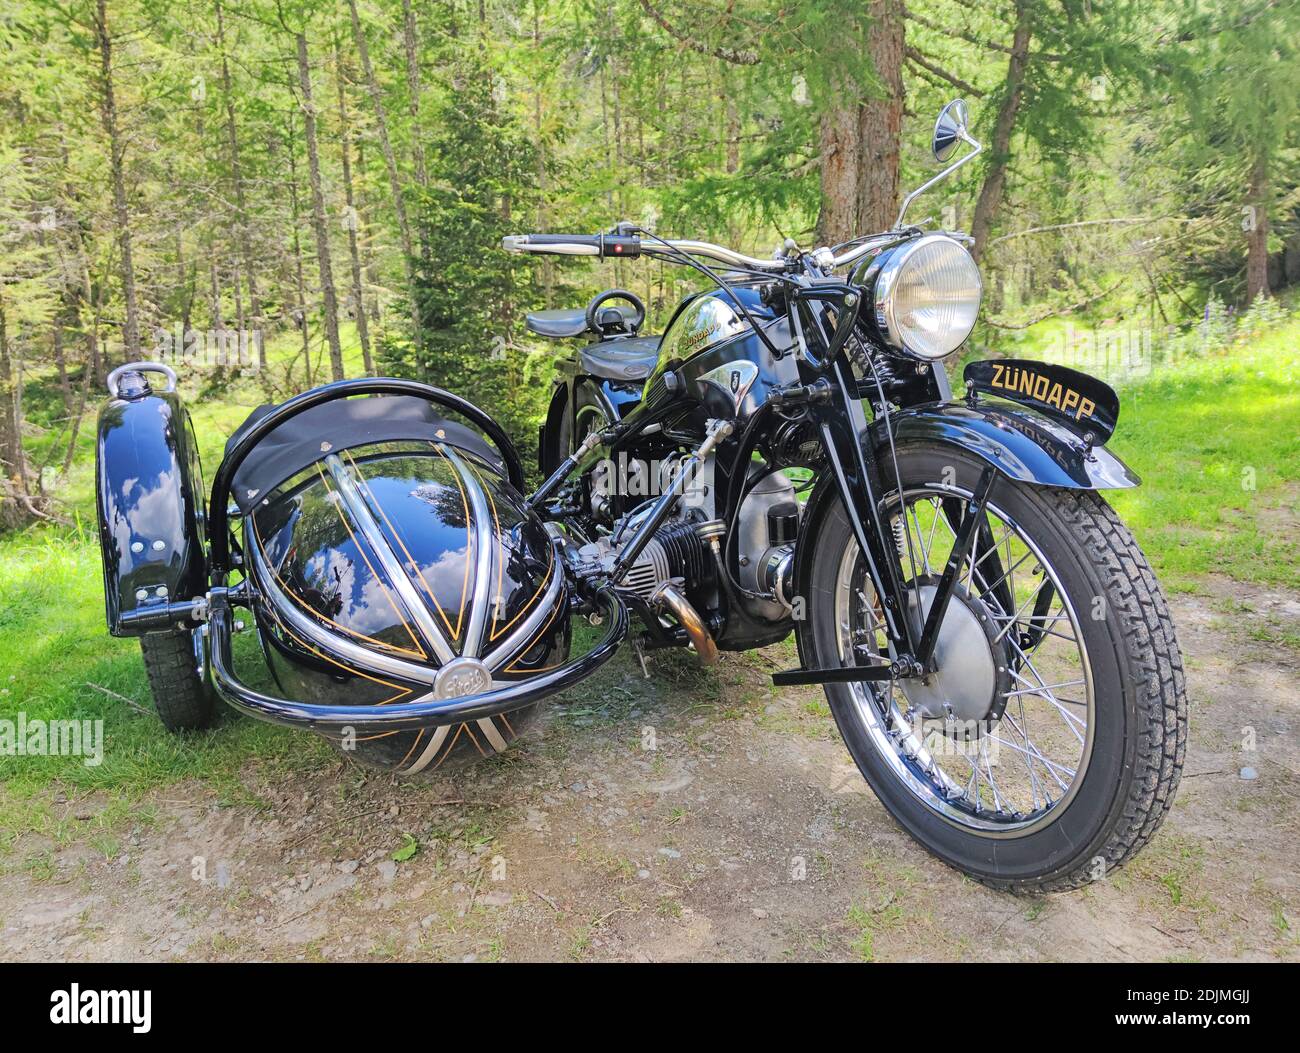 Zündapp KS 600 vintage motorcycle with sidecar Stock Photo - Alamy